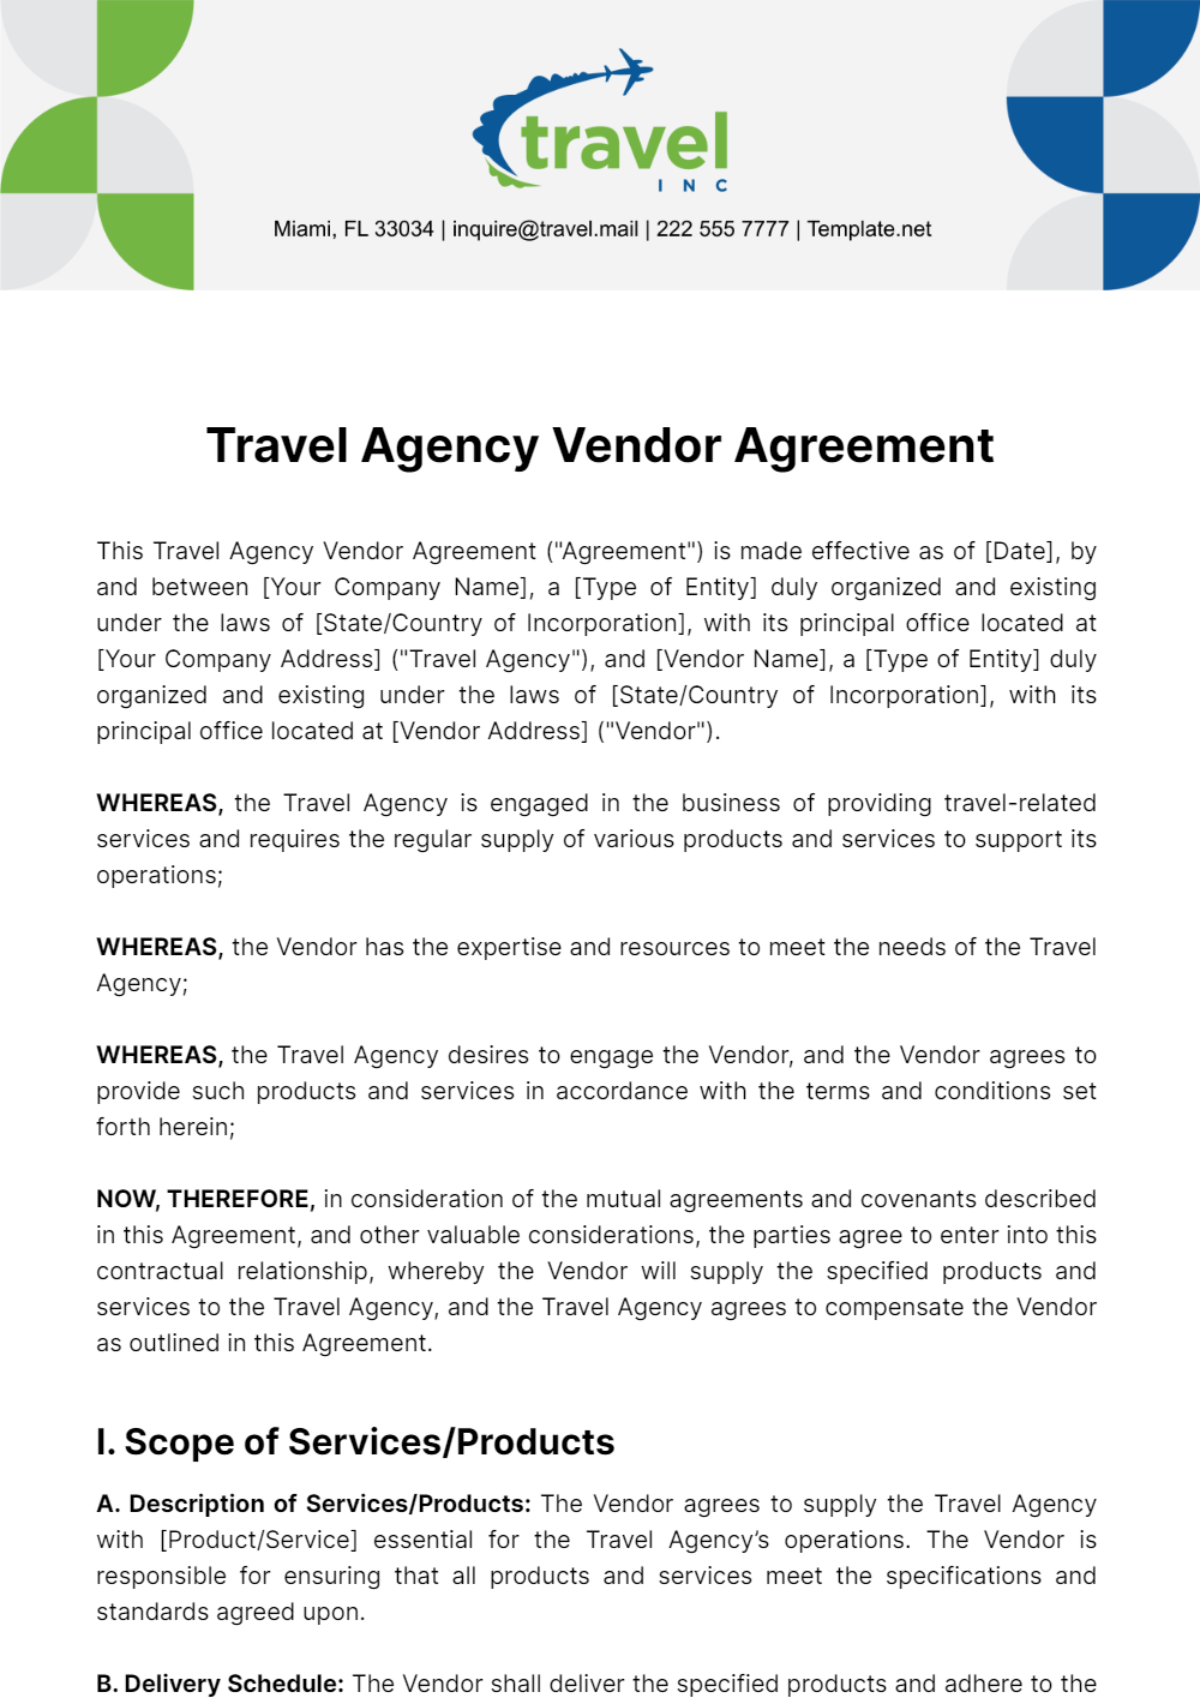 Travel Agency Vendor Agreement Template